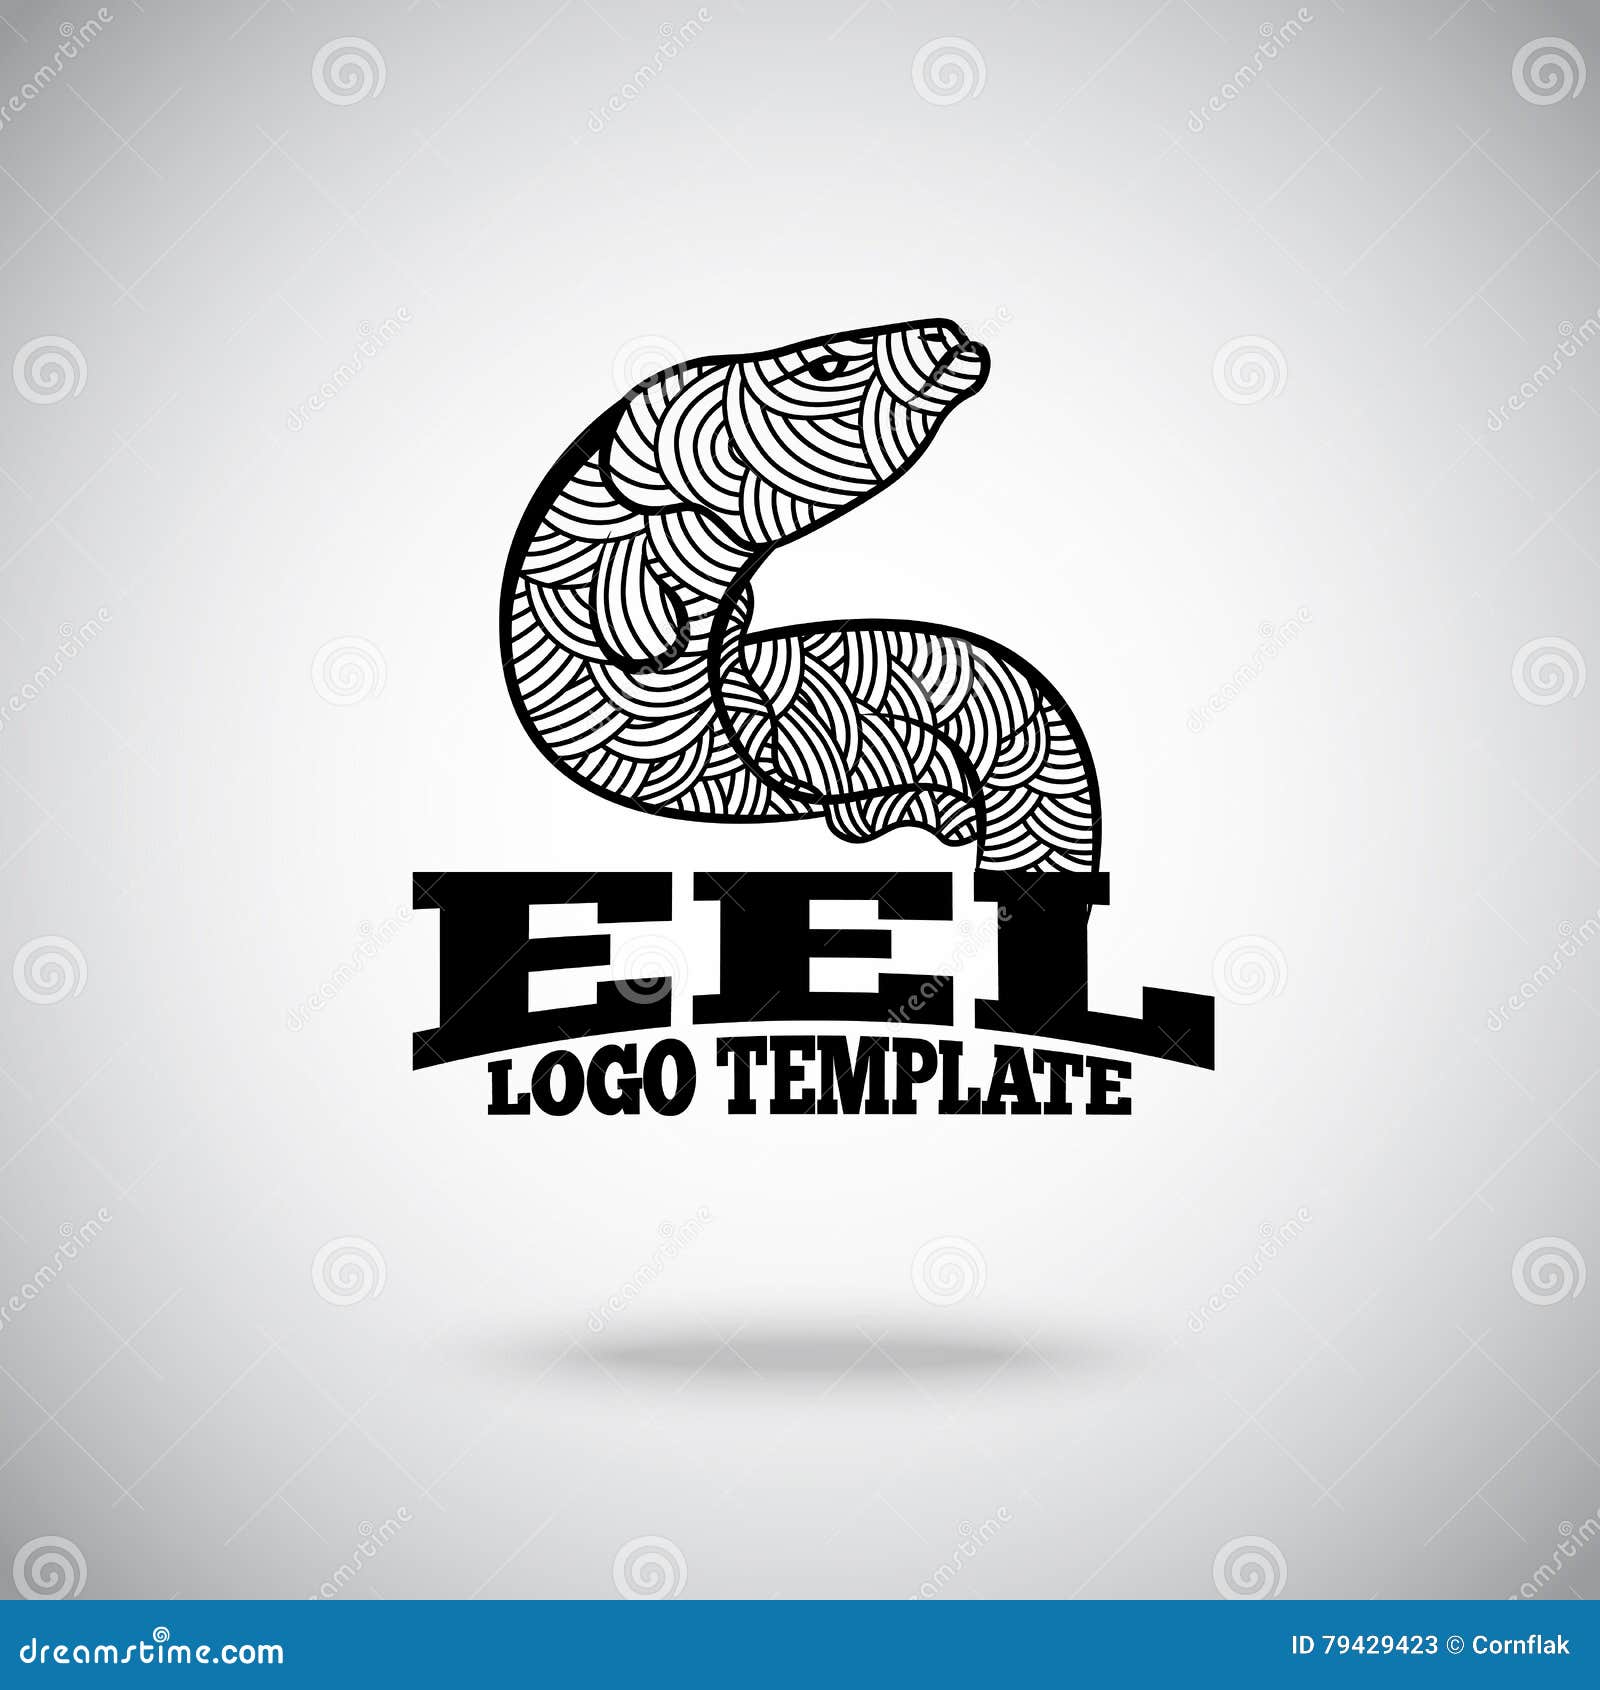  eel logo concept for sport teams, business etc